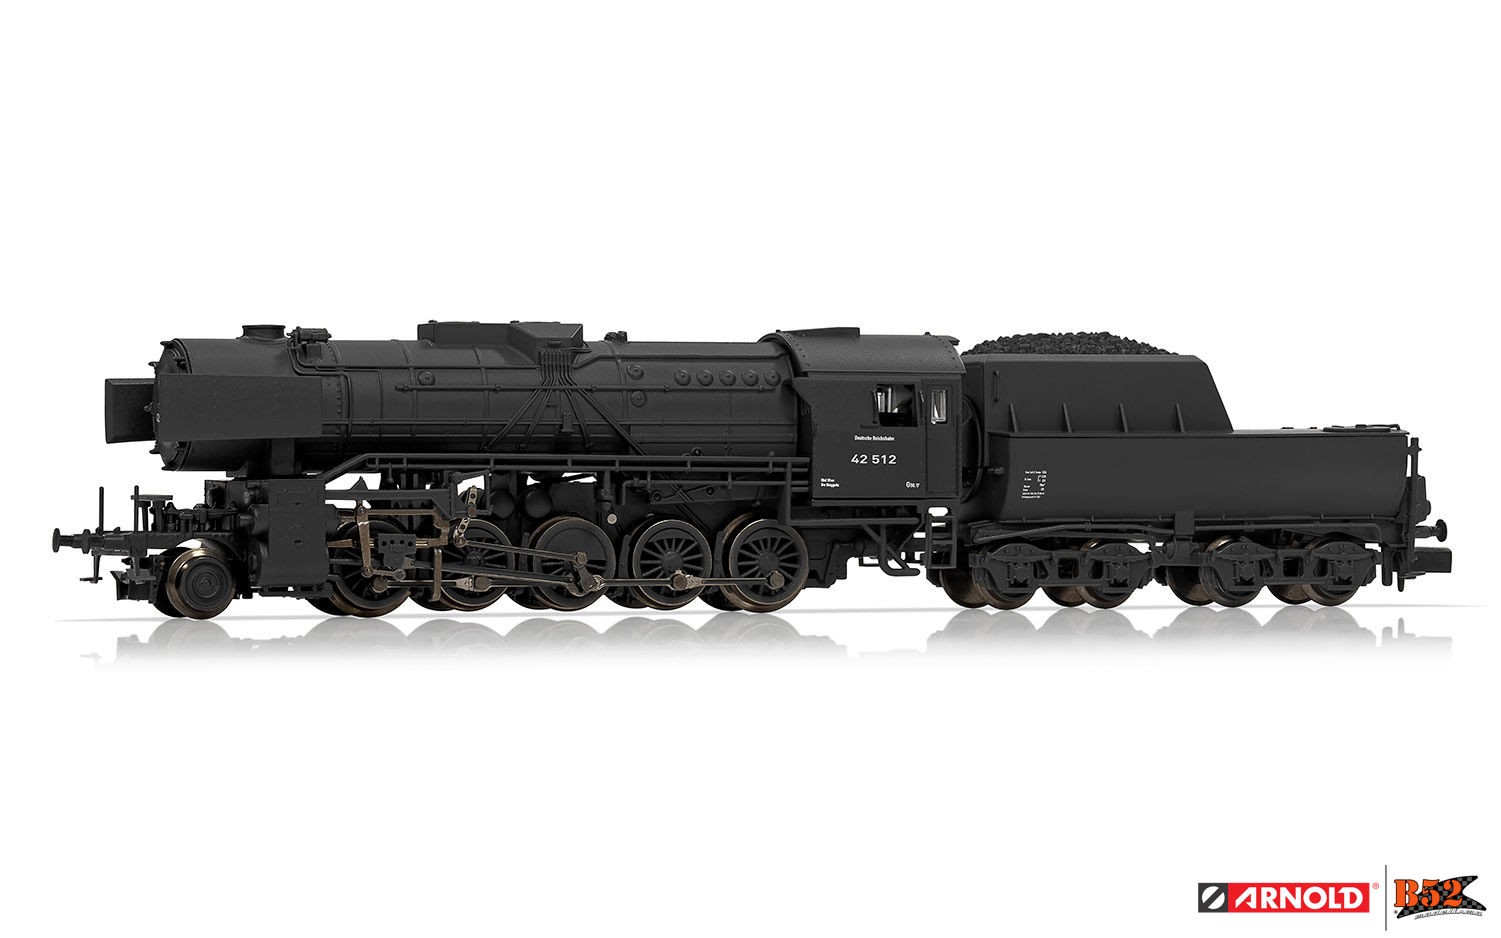 Arnold N - Locomotiva Vapor DRB Classe 42 #42 512: HN2333